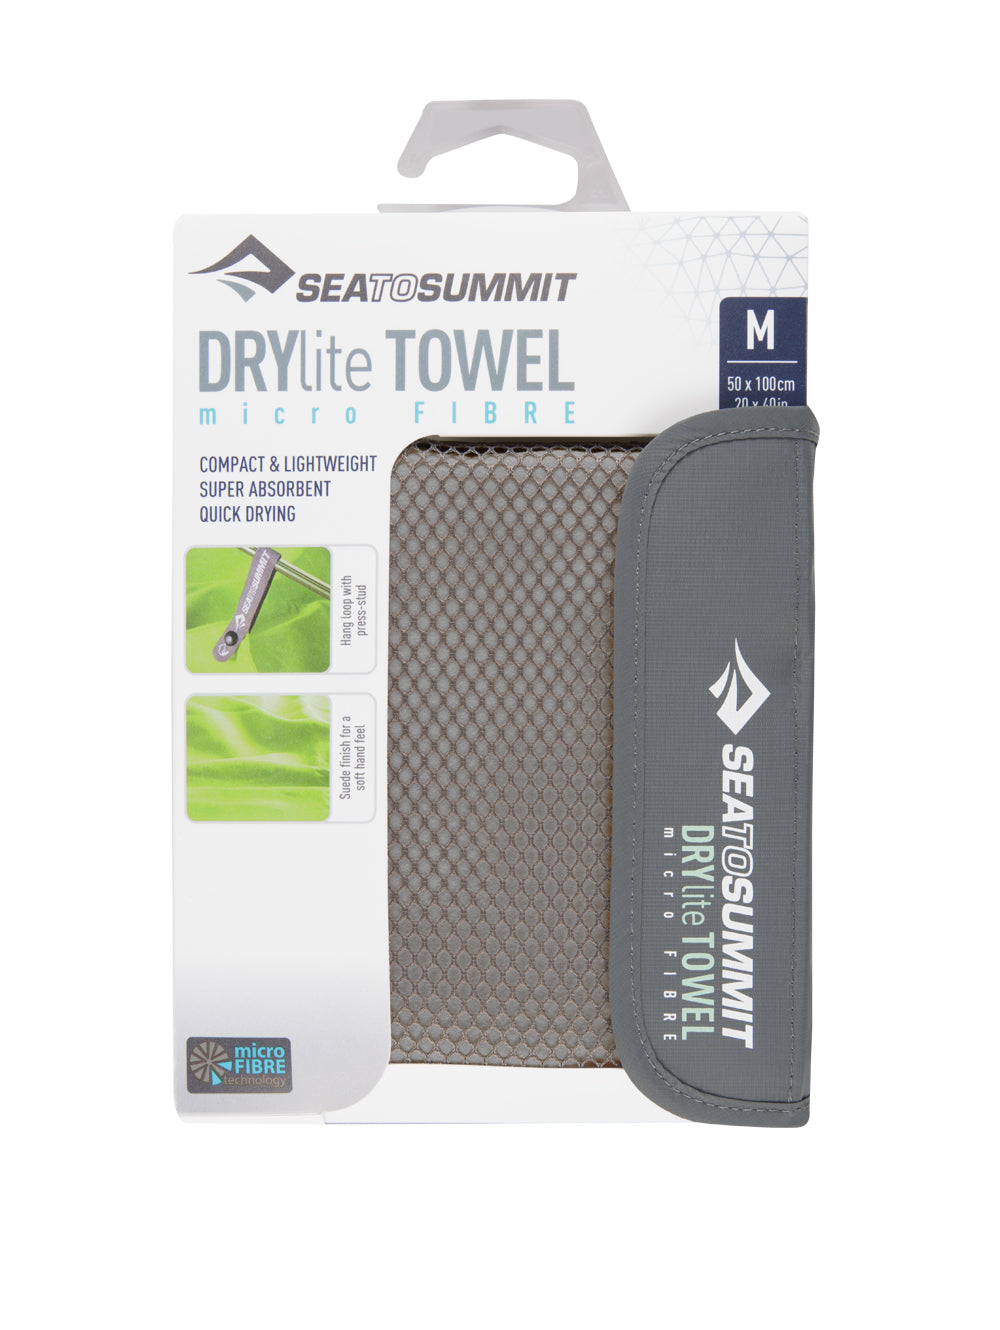 Sea to Summit DryLite Towel